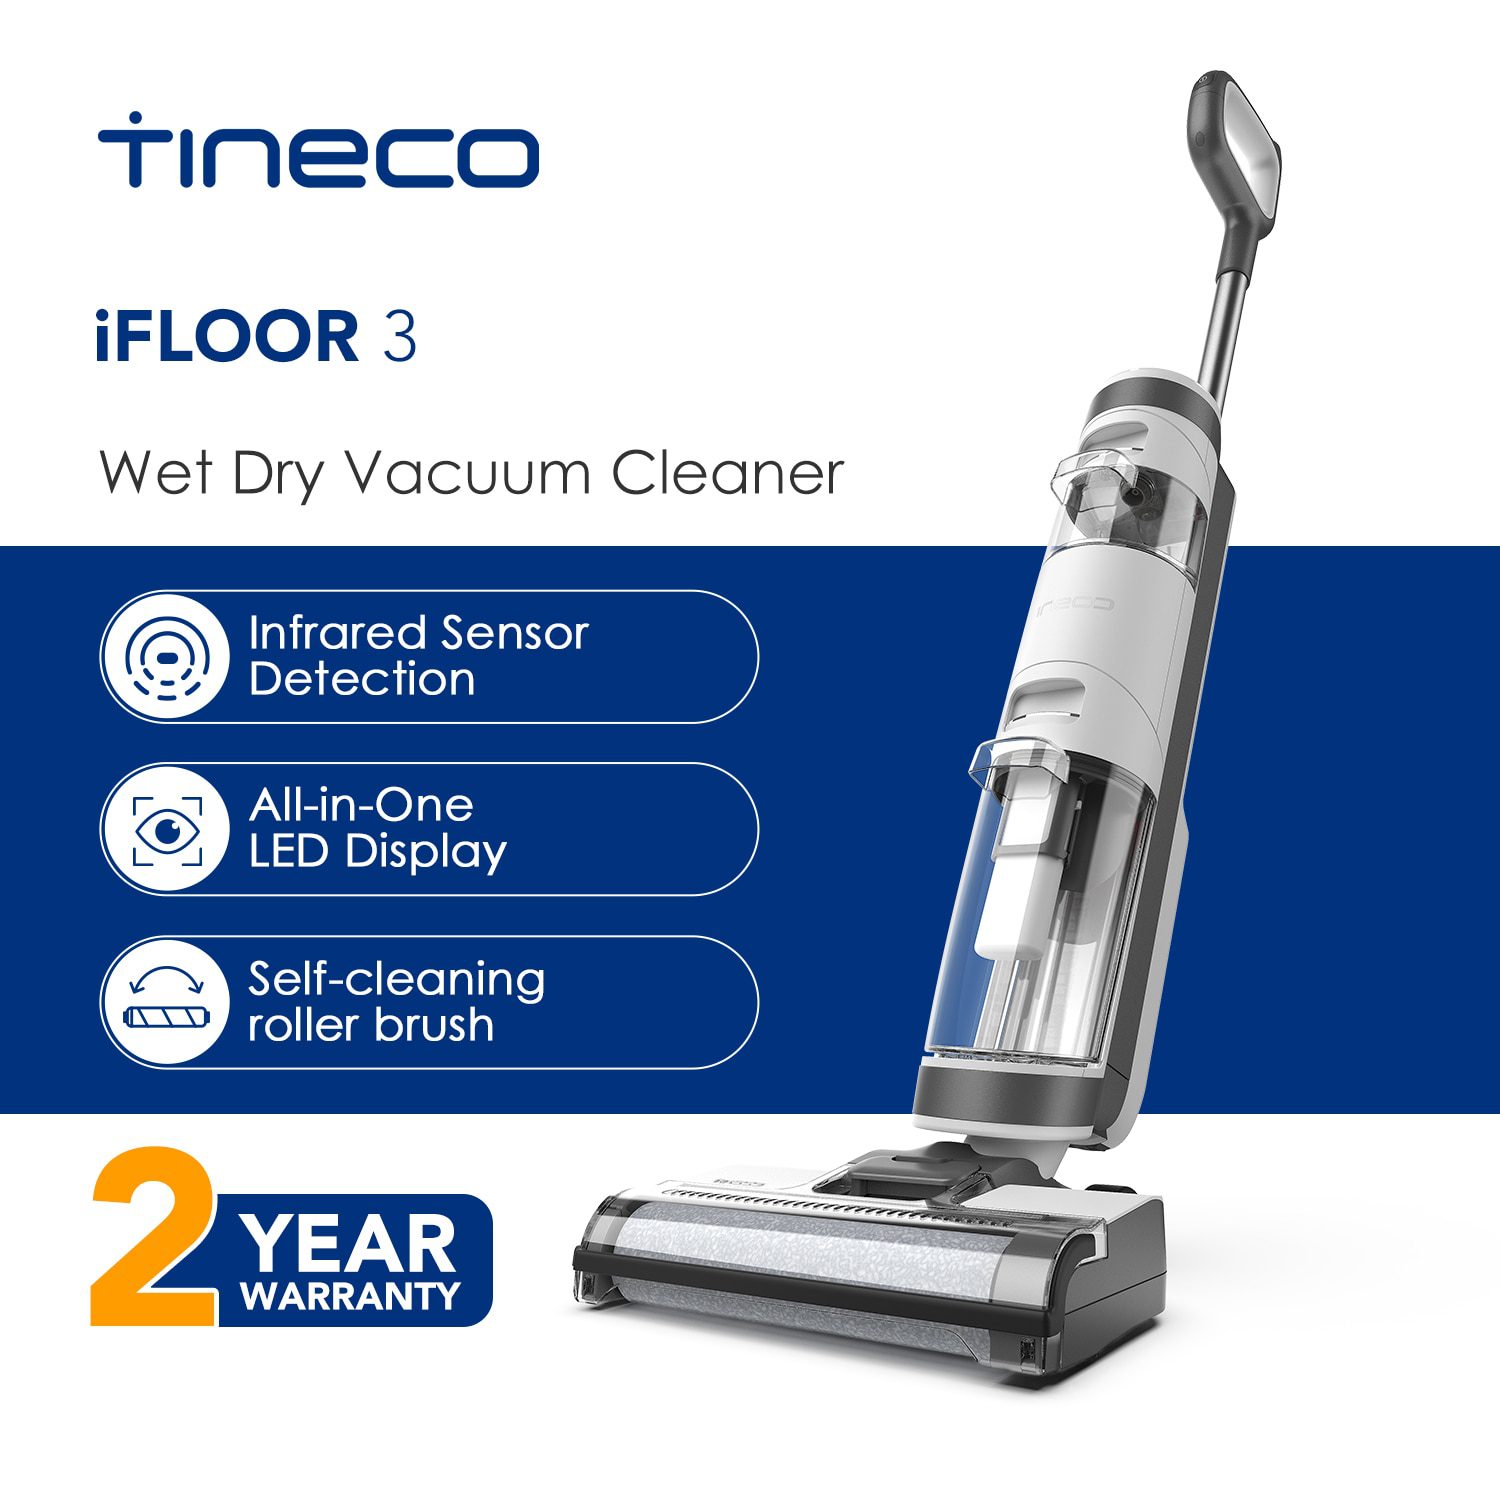 For Tineco Floor One S3 / S3Breeze Tineco iFloor 3 / iFloor Breeze